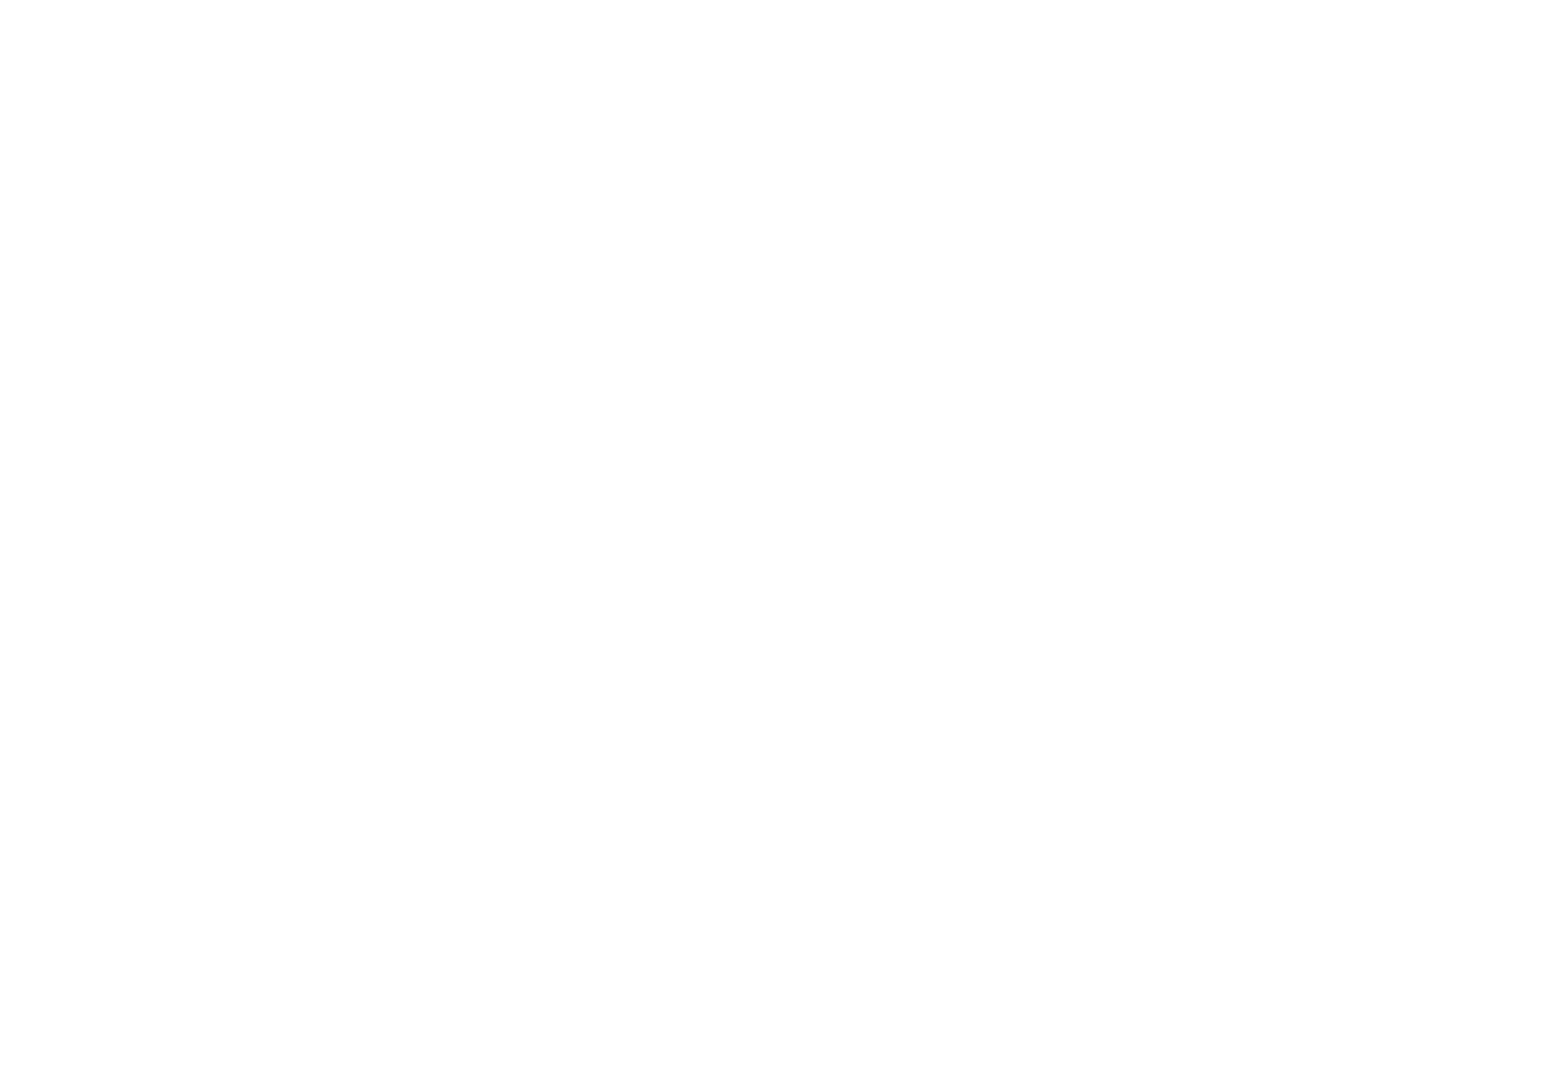 Sozap logo for dark backgrounds (transparent PNG)